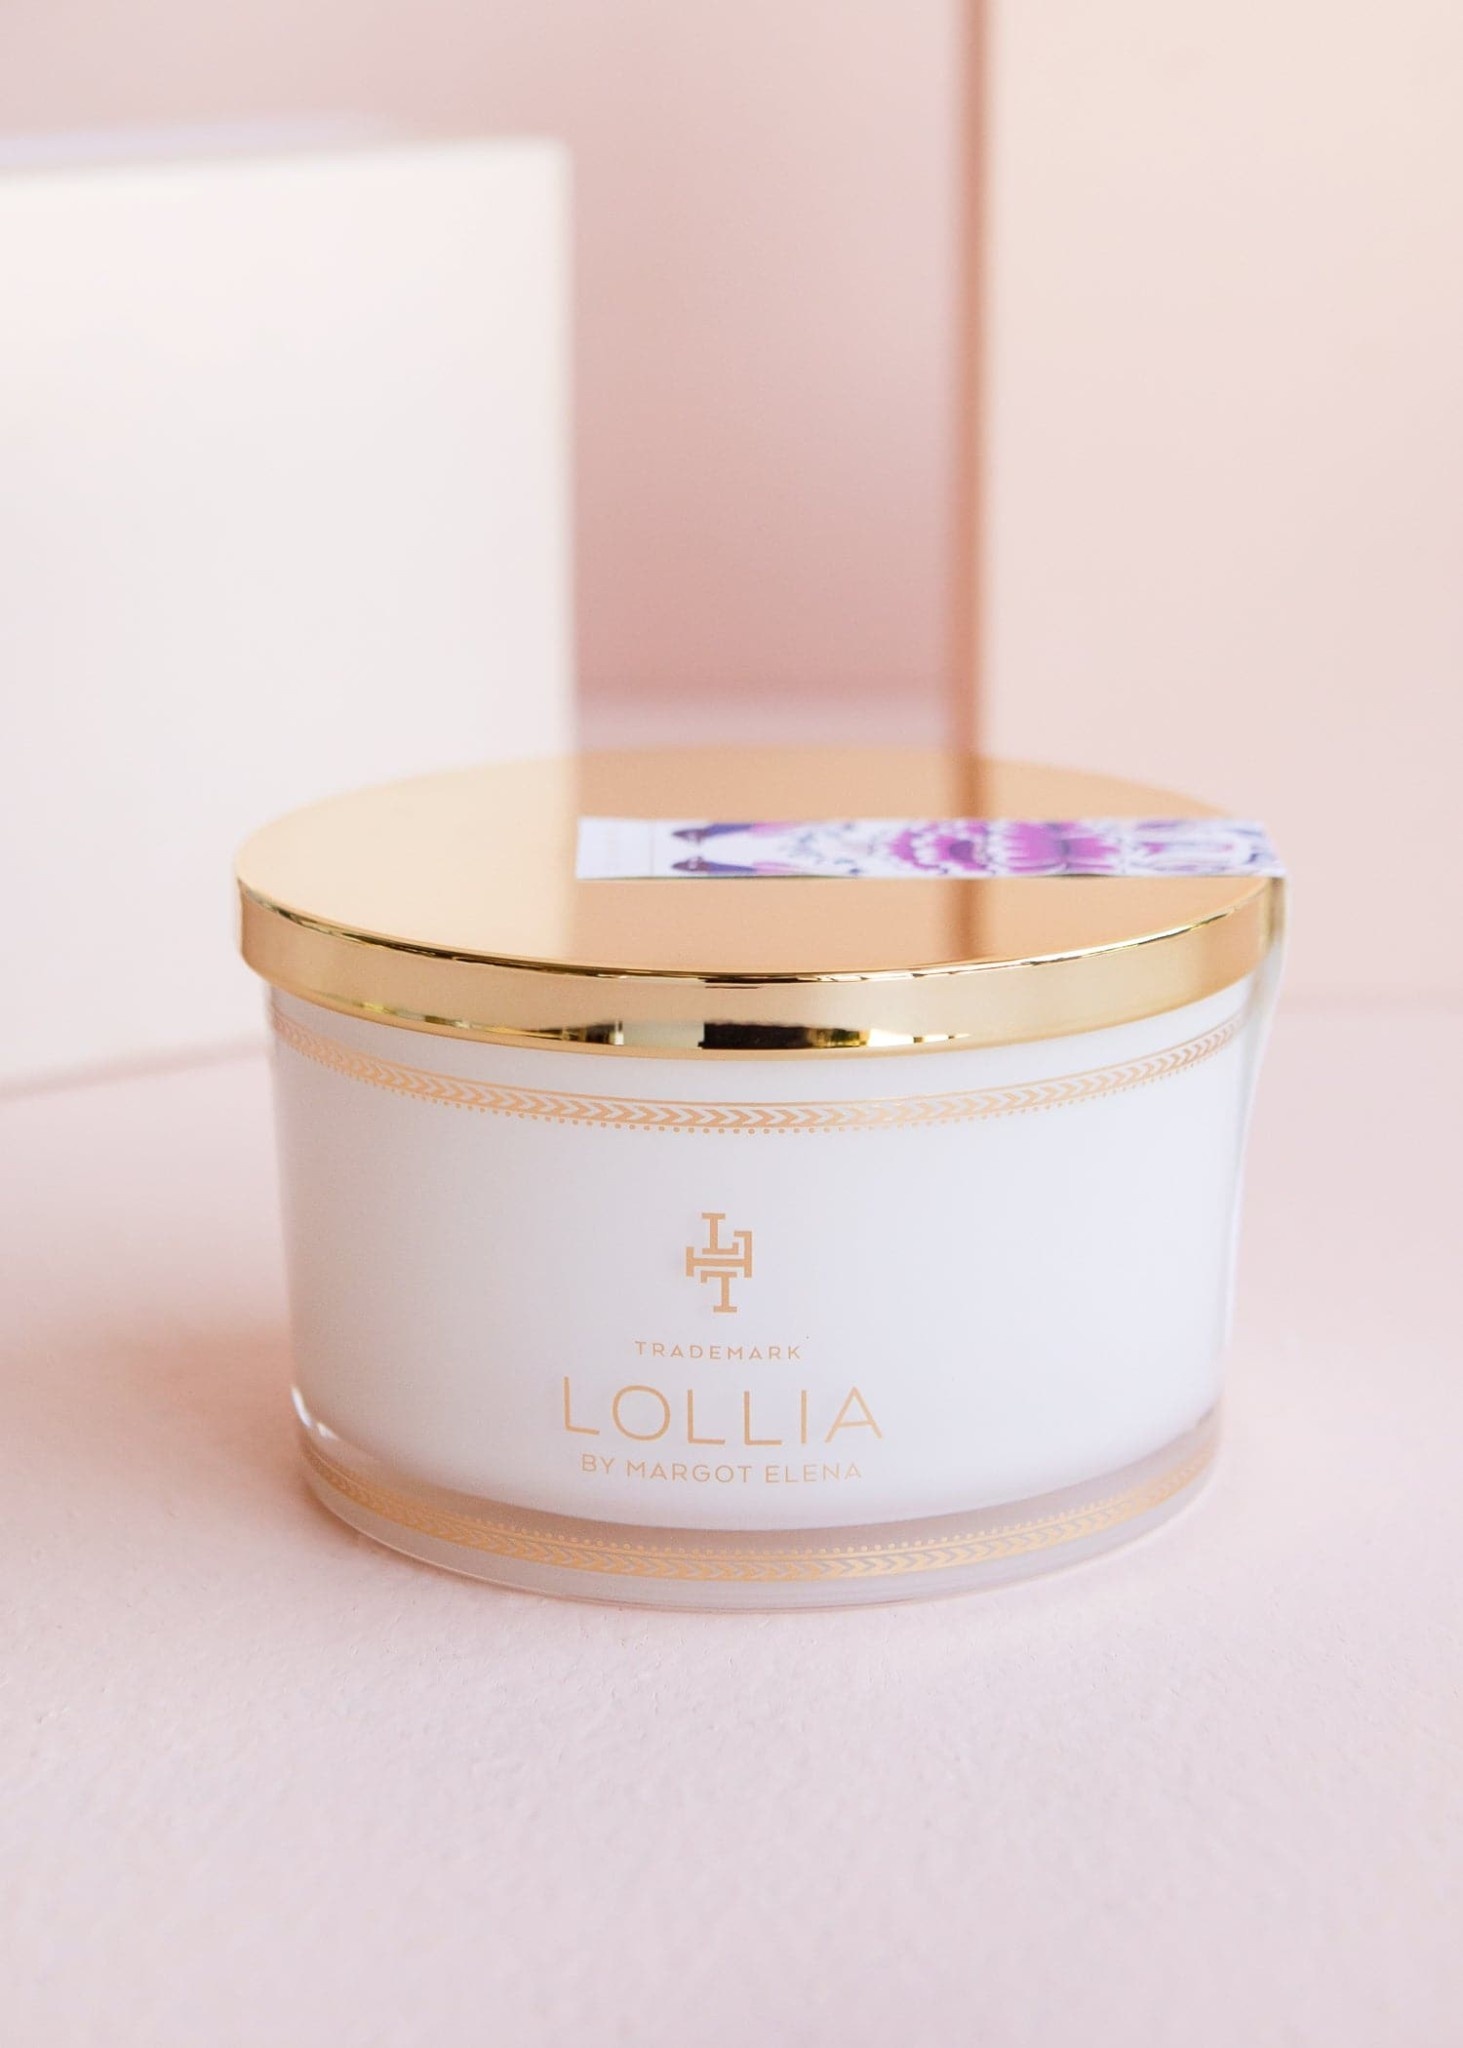 Lollia Imagine Bath Salts, 16 oz